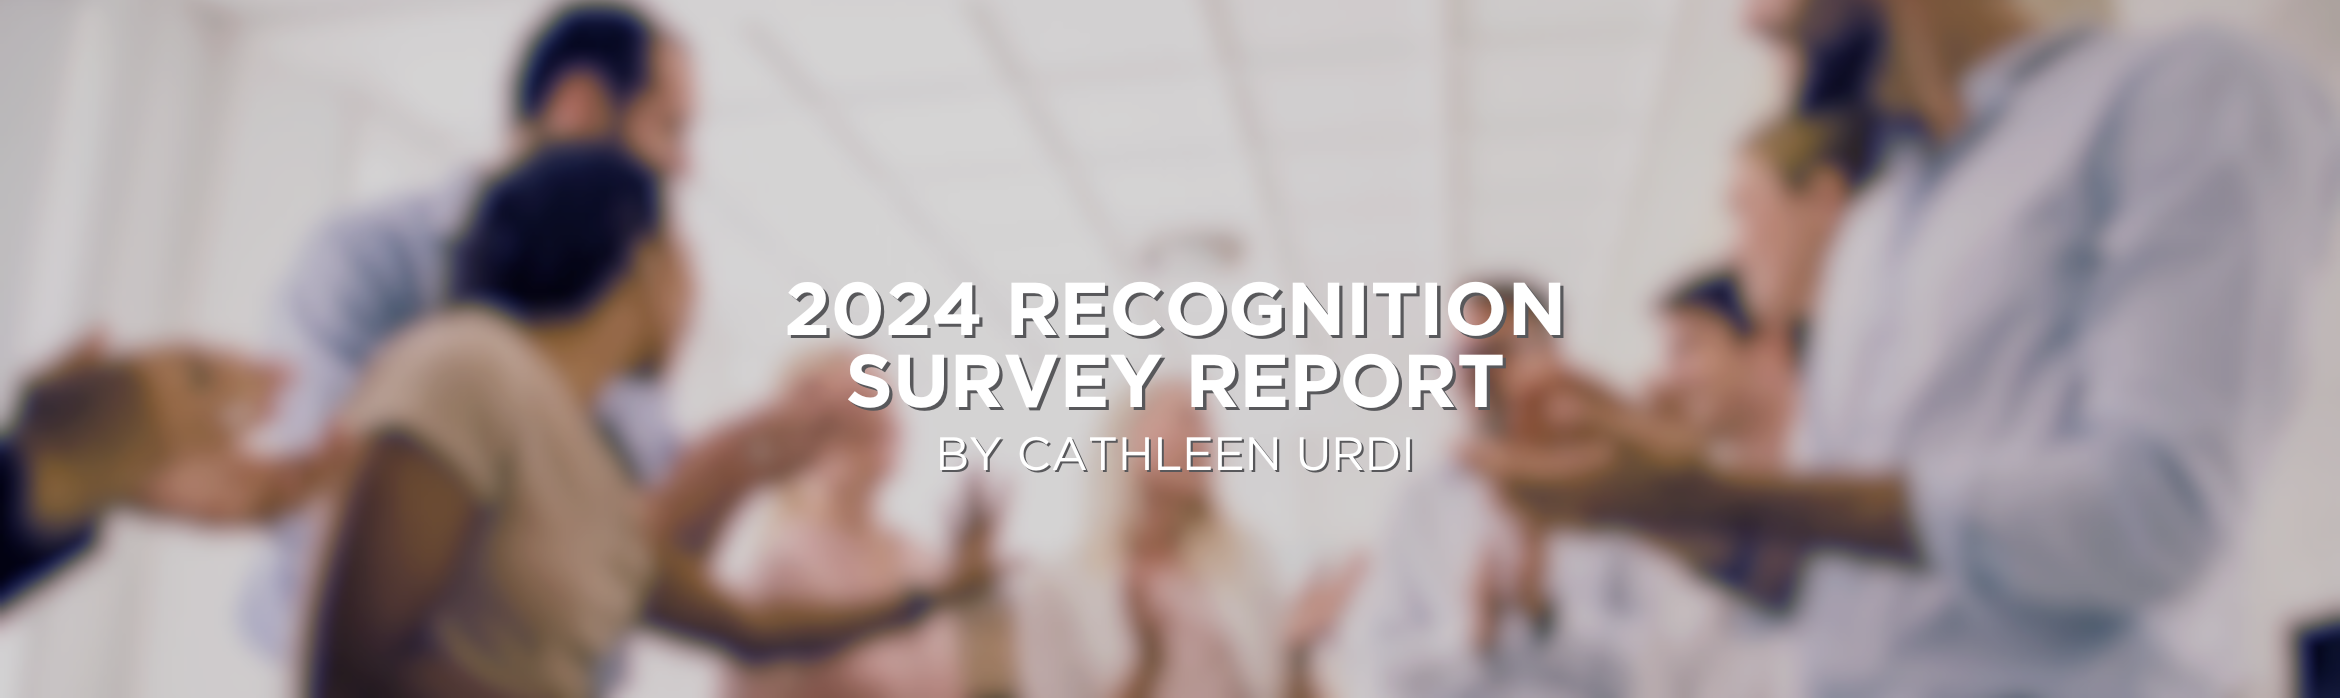 The 2024 Recognition Survey Report